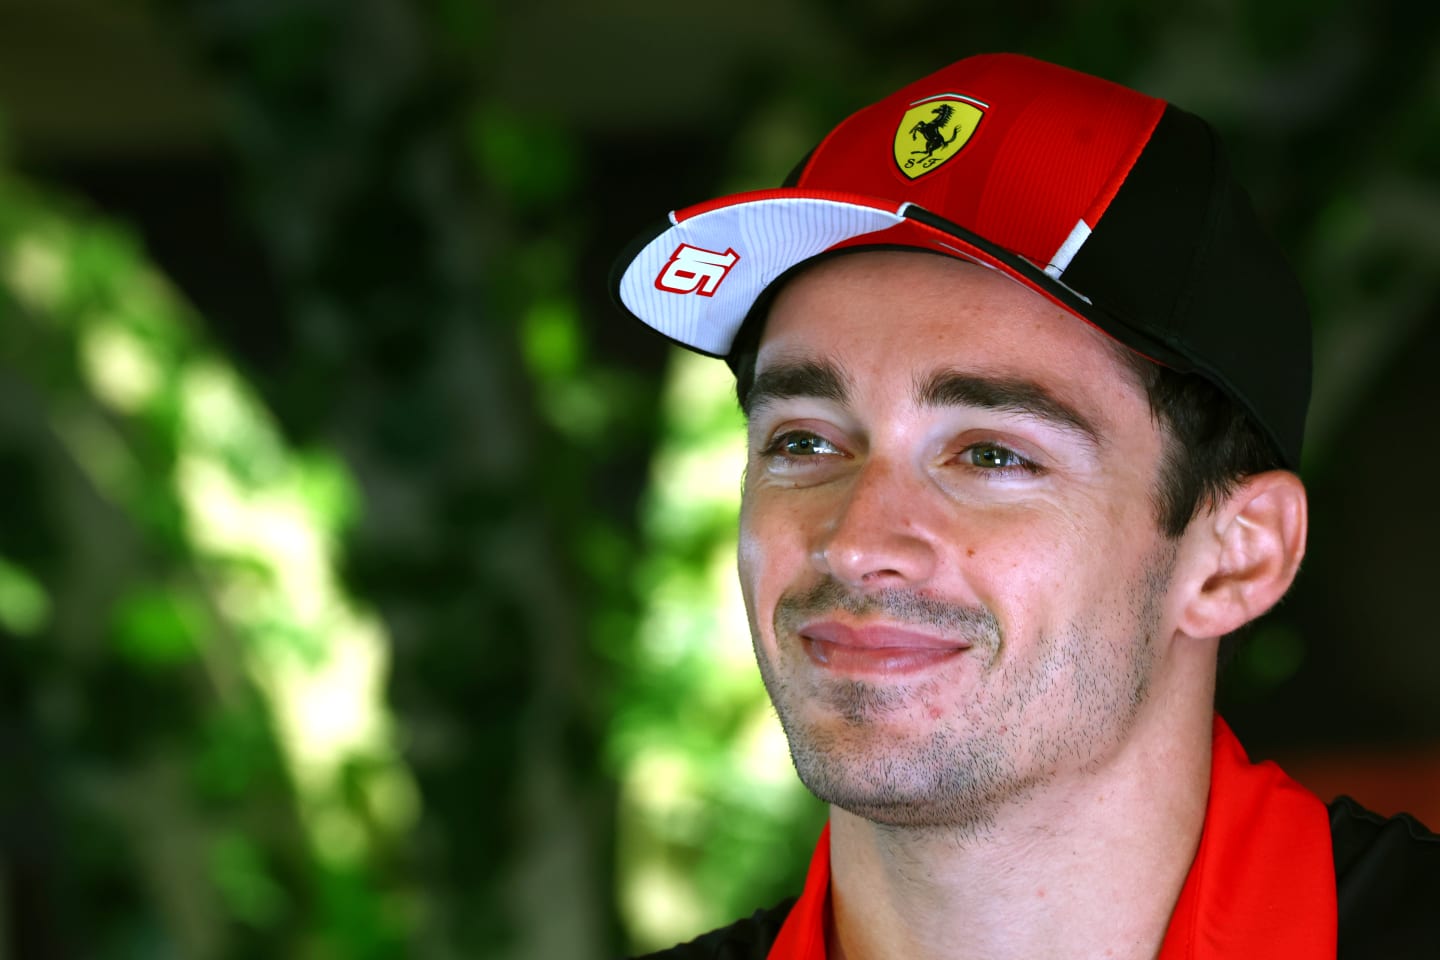 JEDDAH, SAUDI ARABIA - MARCH 16: Charles Leclerc of Monaco and Ferrari talks to the media in the